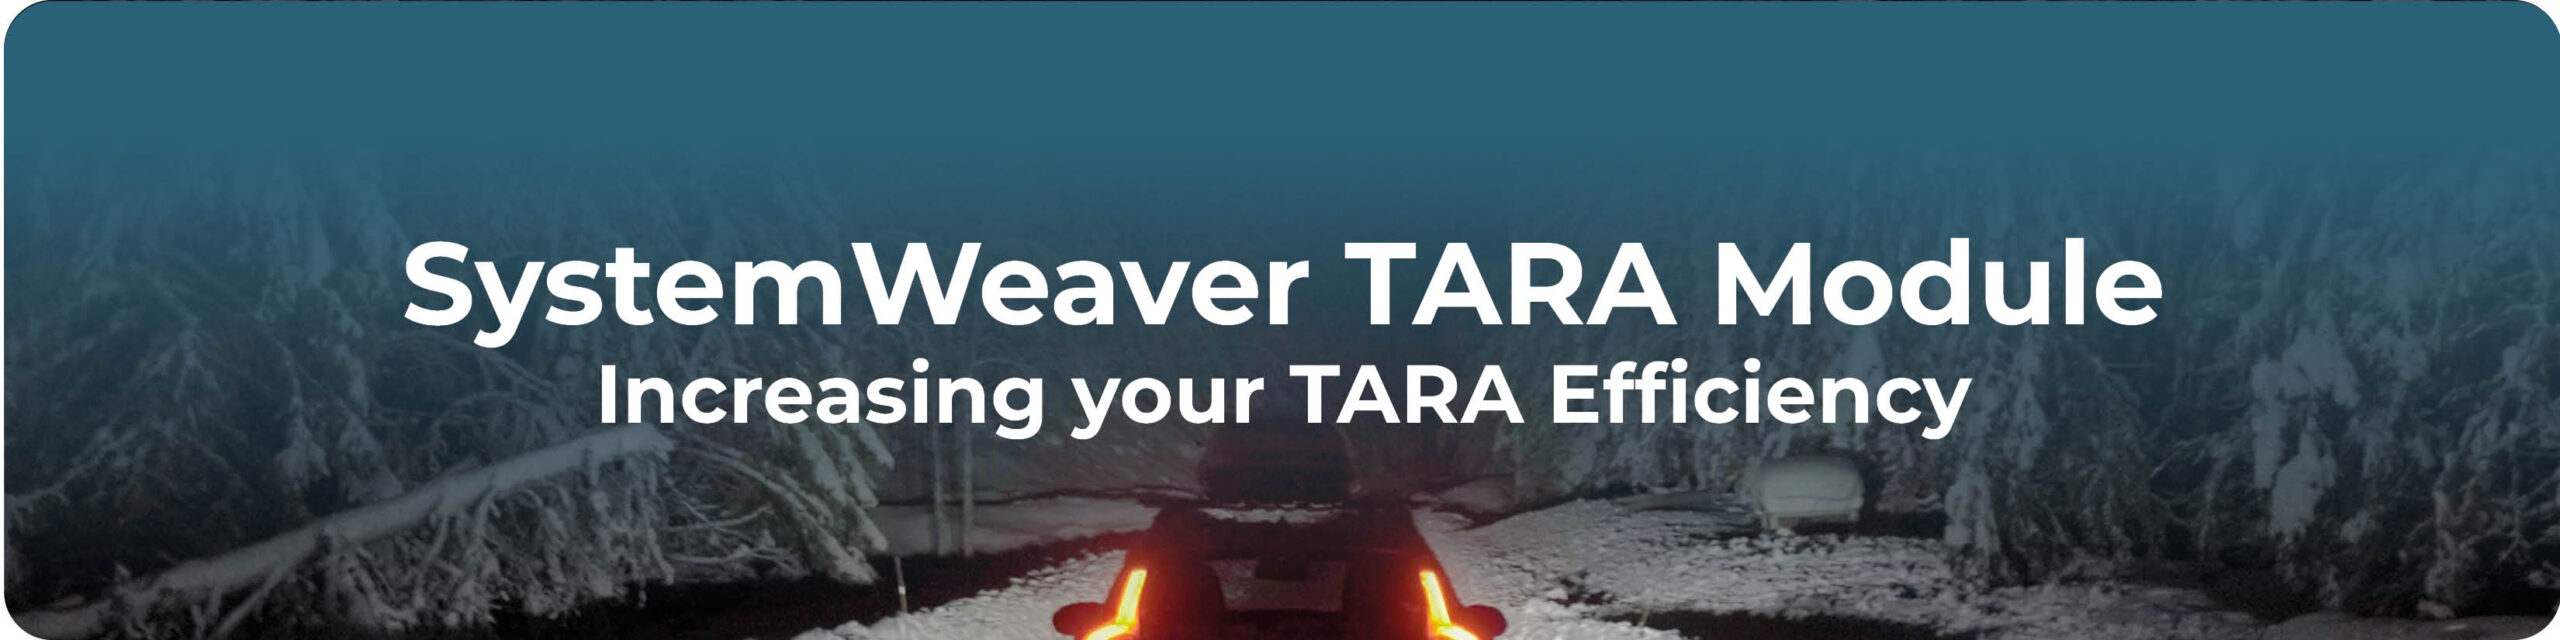 SystemWeaver TARA Module Increasing your TARA Efficiency